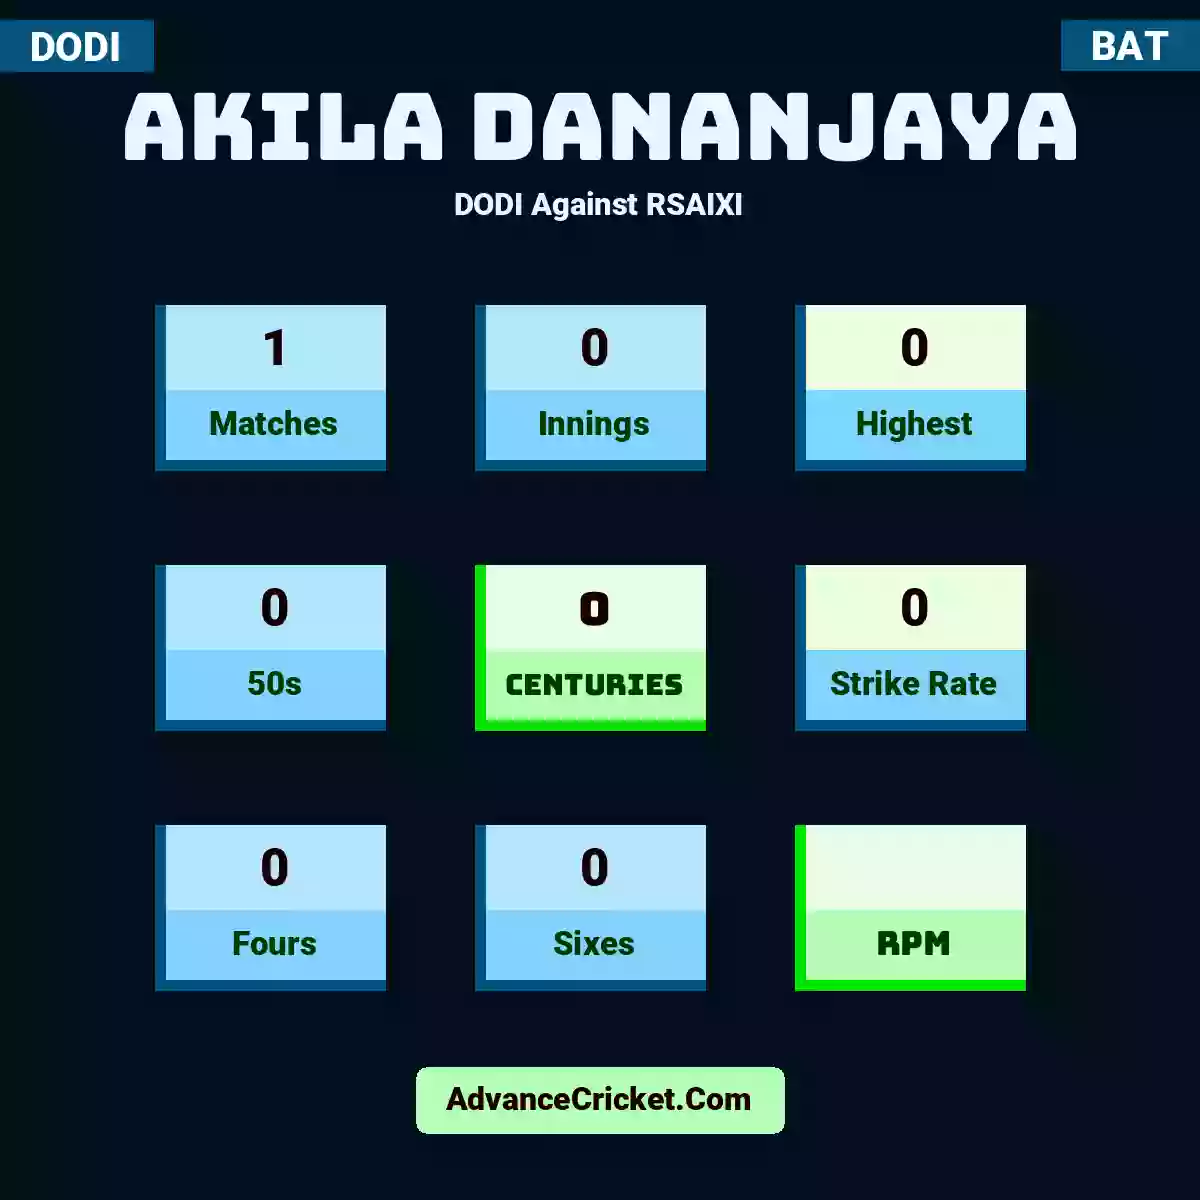 Akila Dananjaya DODI  Against RSAIXI, Akila Dananjaya played 1 matches, scored 0 runs as highest, 0 half-centuries, and 0 centuries, with a strike rate of 0. A.Dananjaya hit 0 fours and 0 sixes.